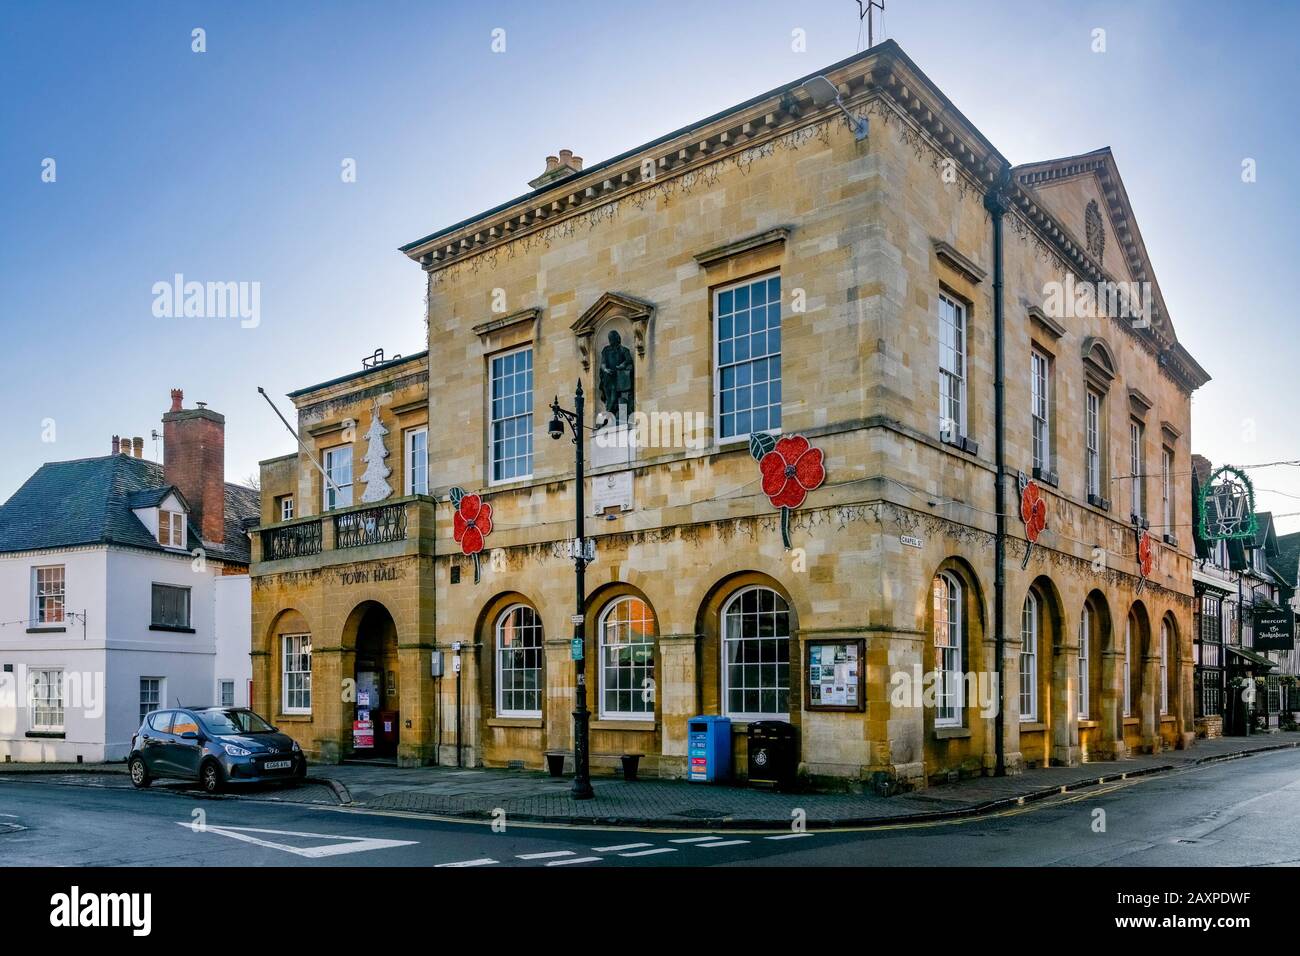 Town Hall, Stratford upon Avon, Warwickshire, England, UK Stock Photo